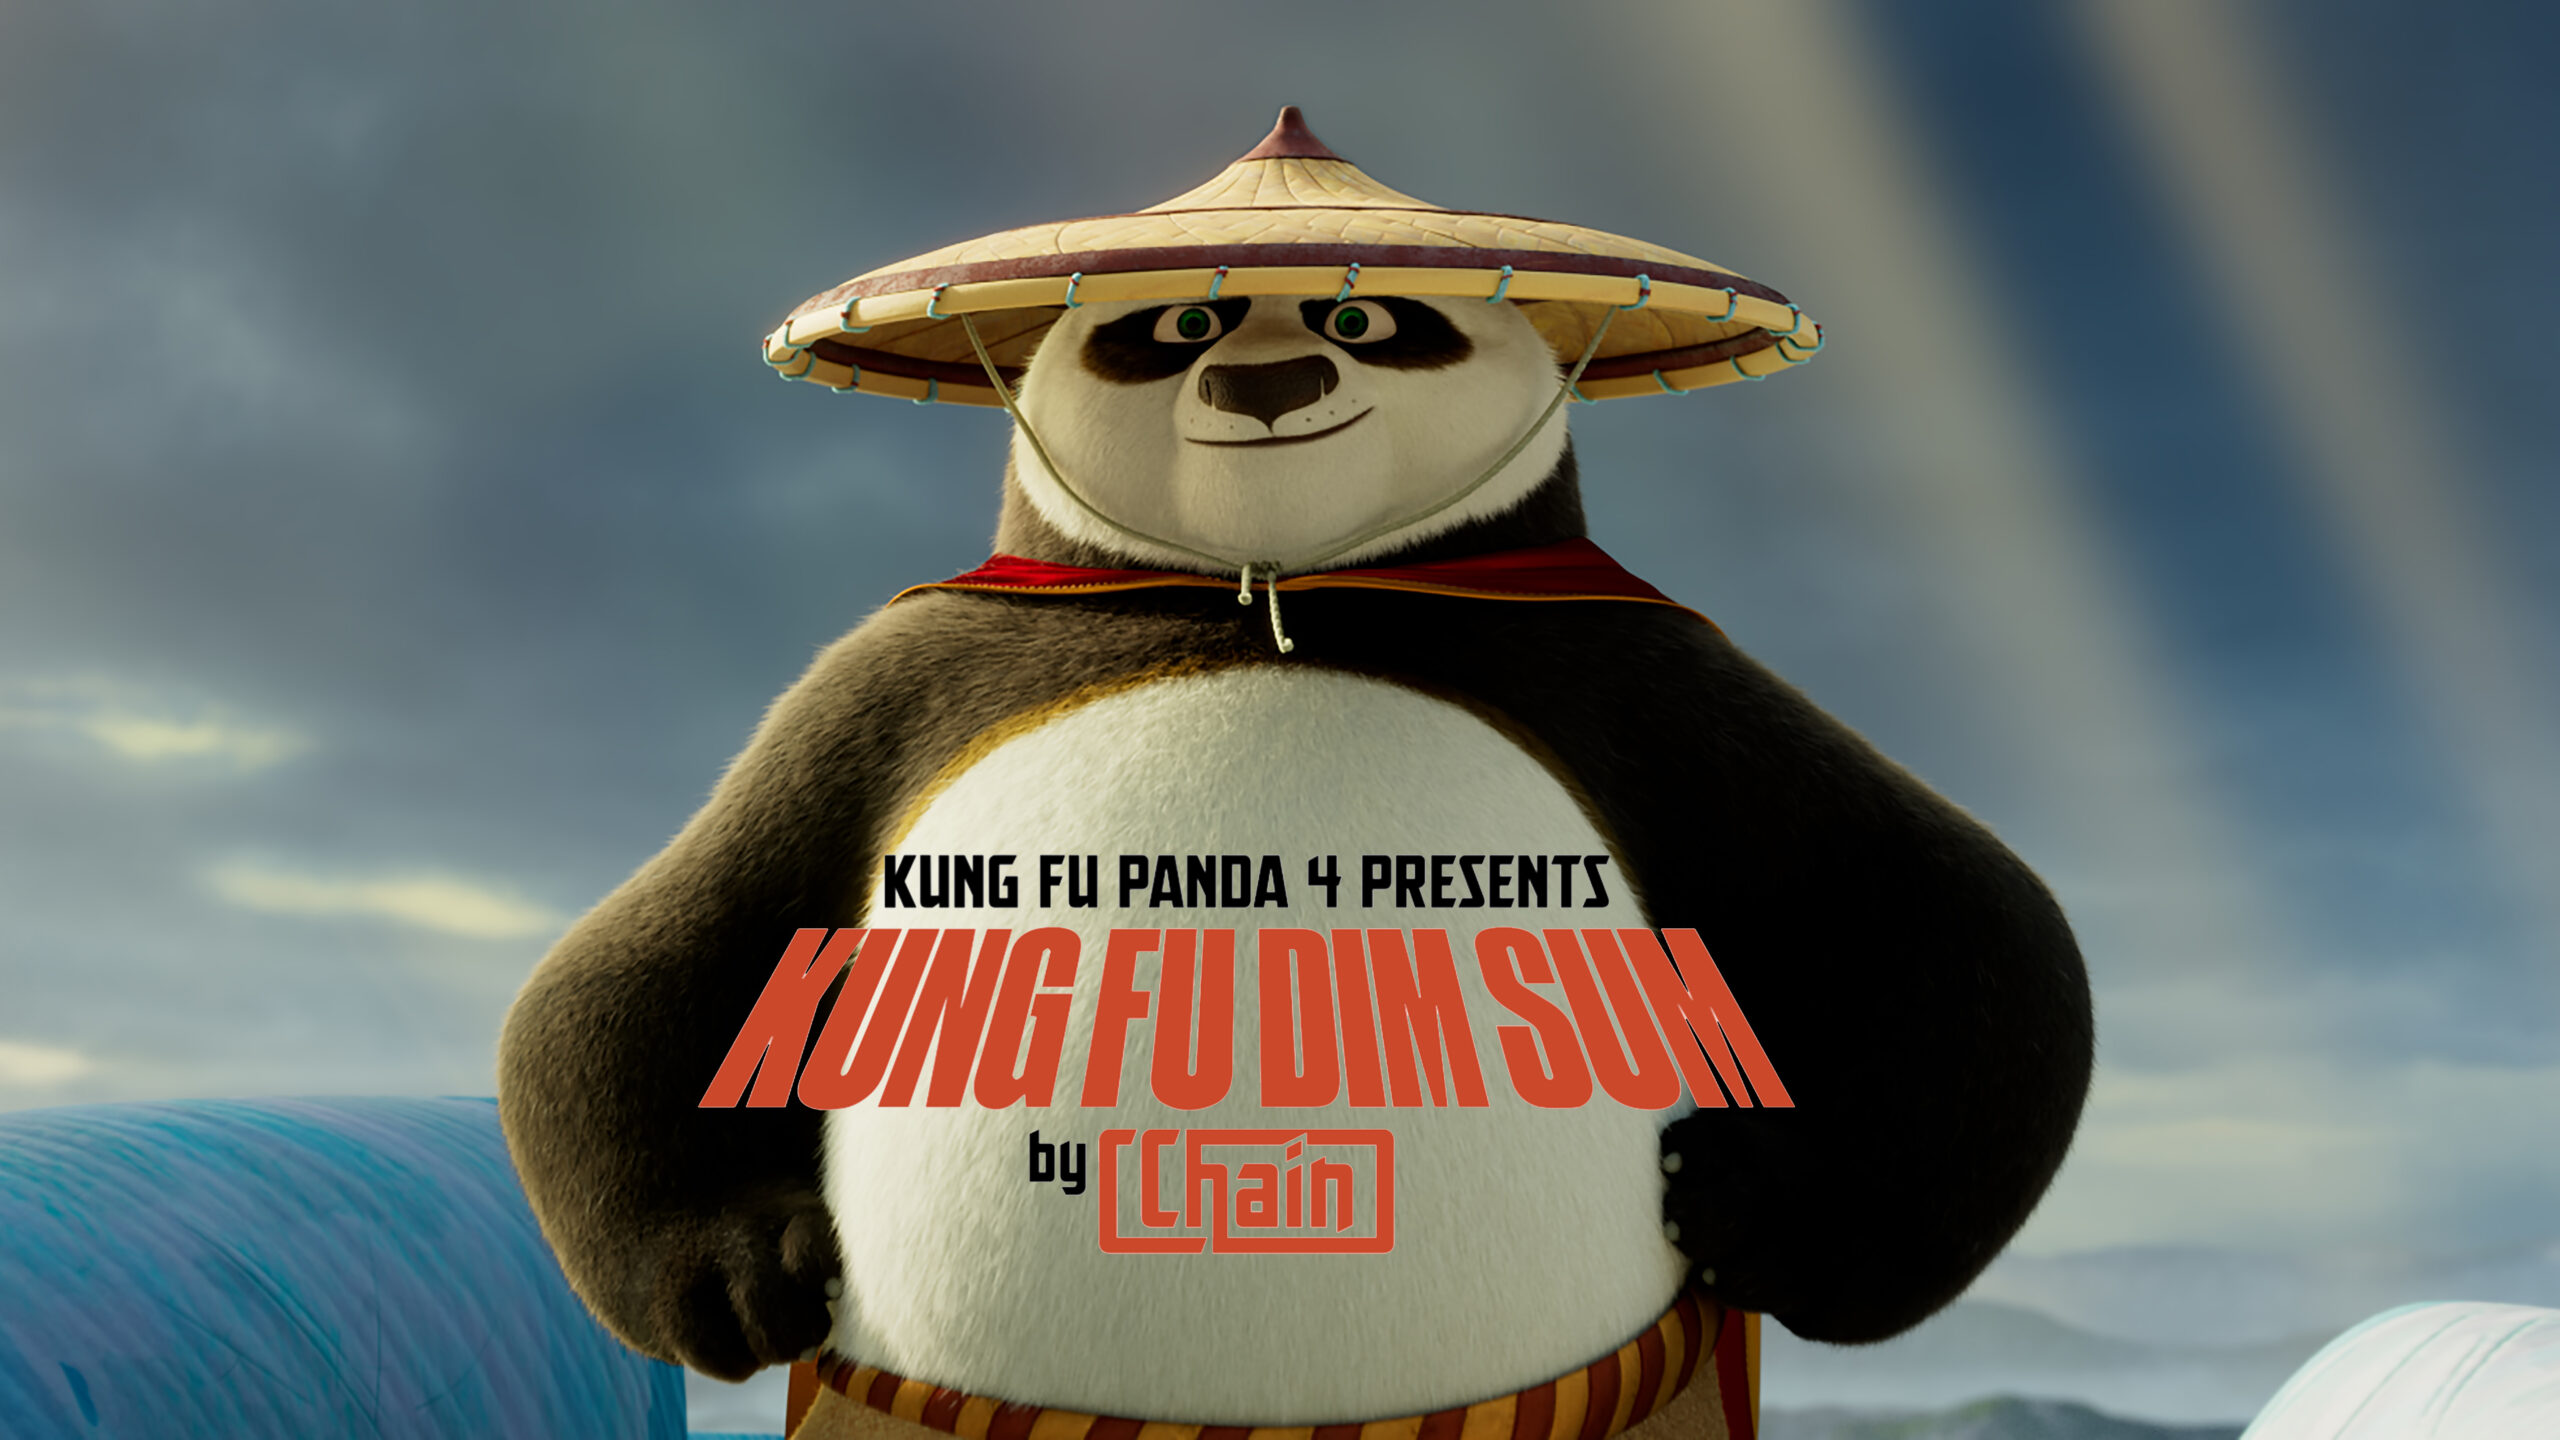 Kung Fu Panda 4 Chain